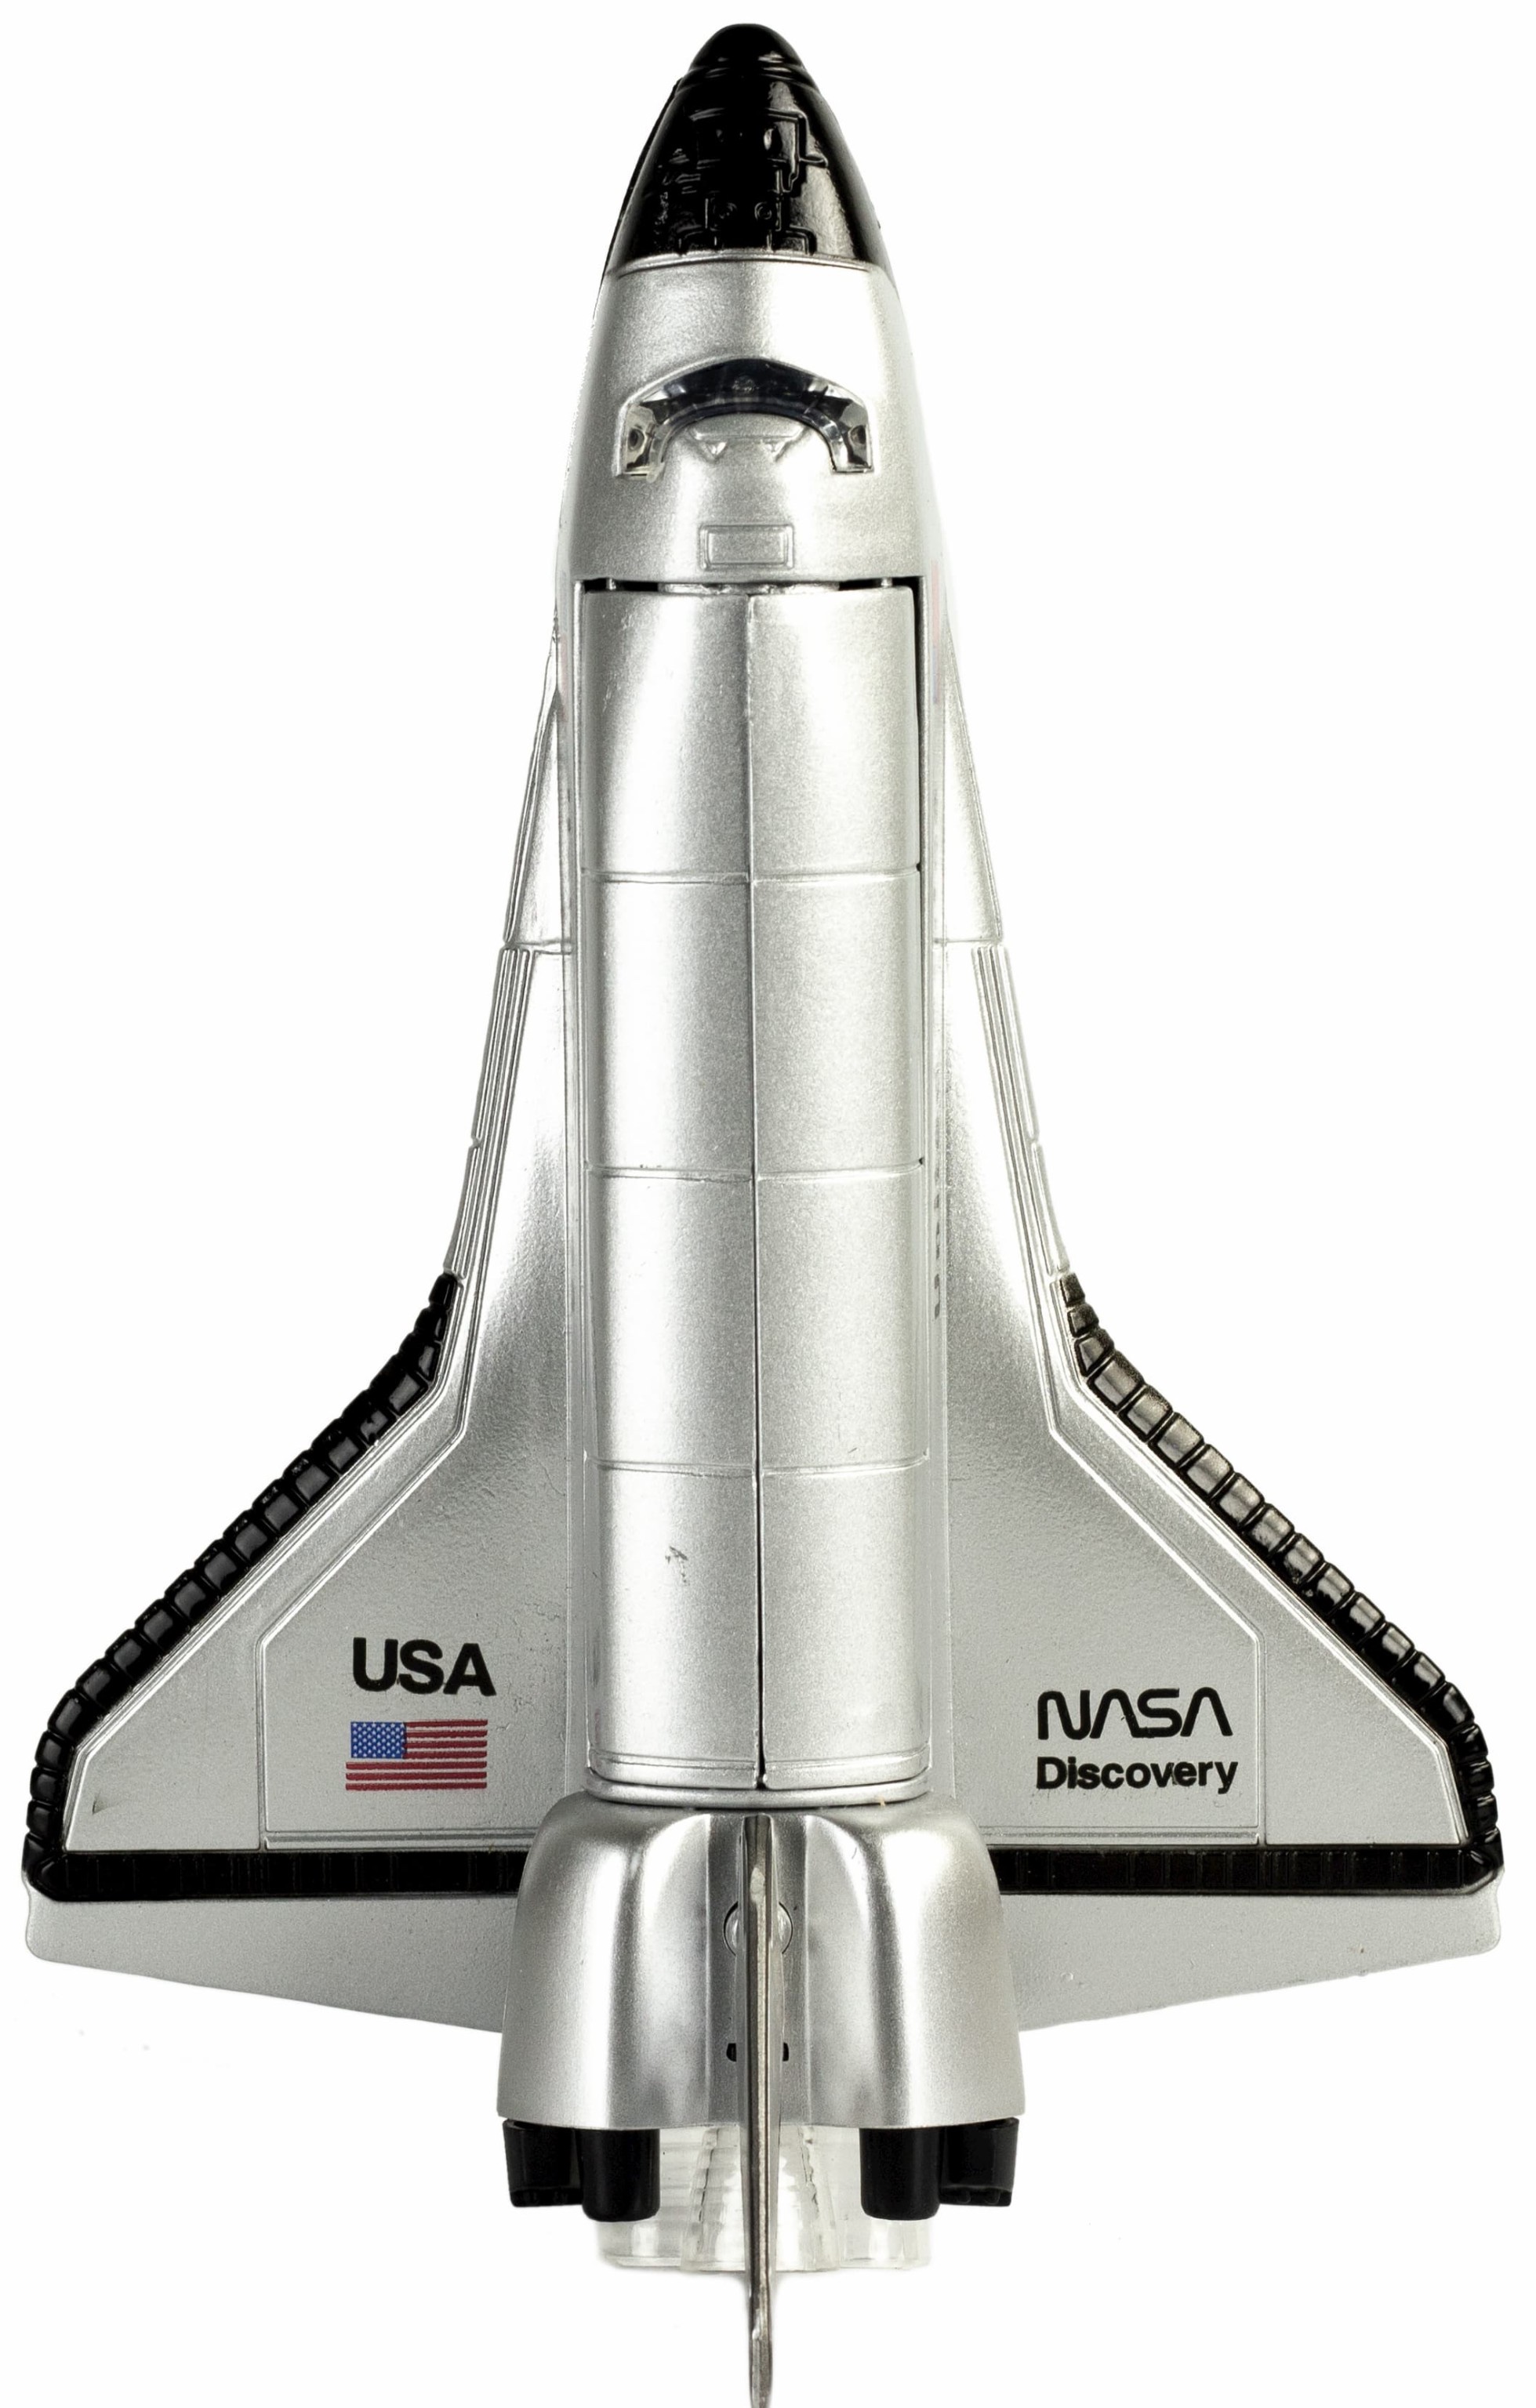 Металлический космический шаттл 1:100 «NASA: United States» 20 см. 290S, свет, звук / Серебристый